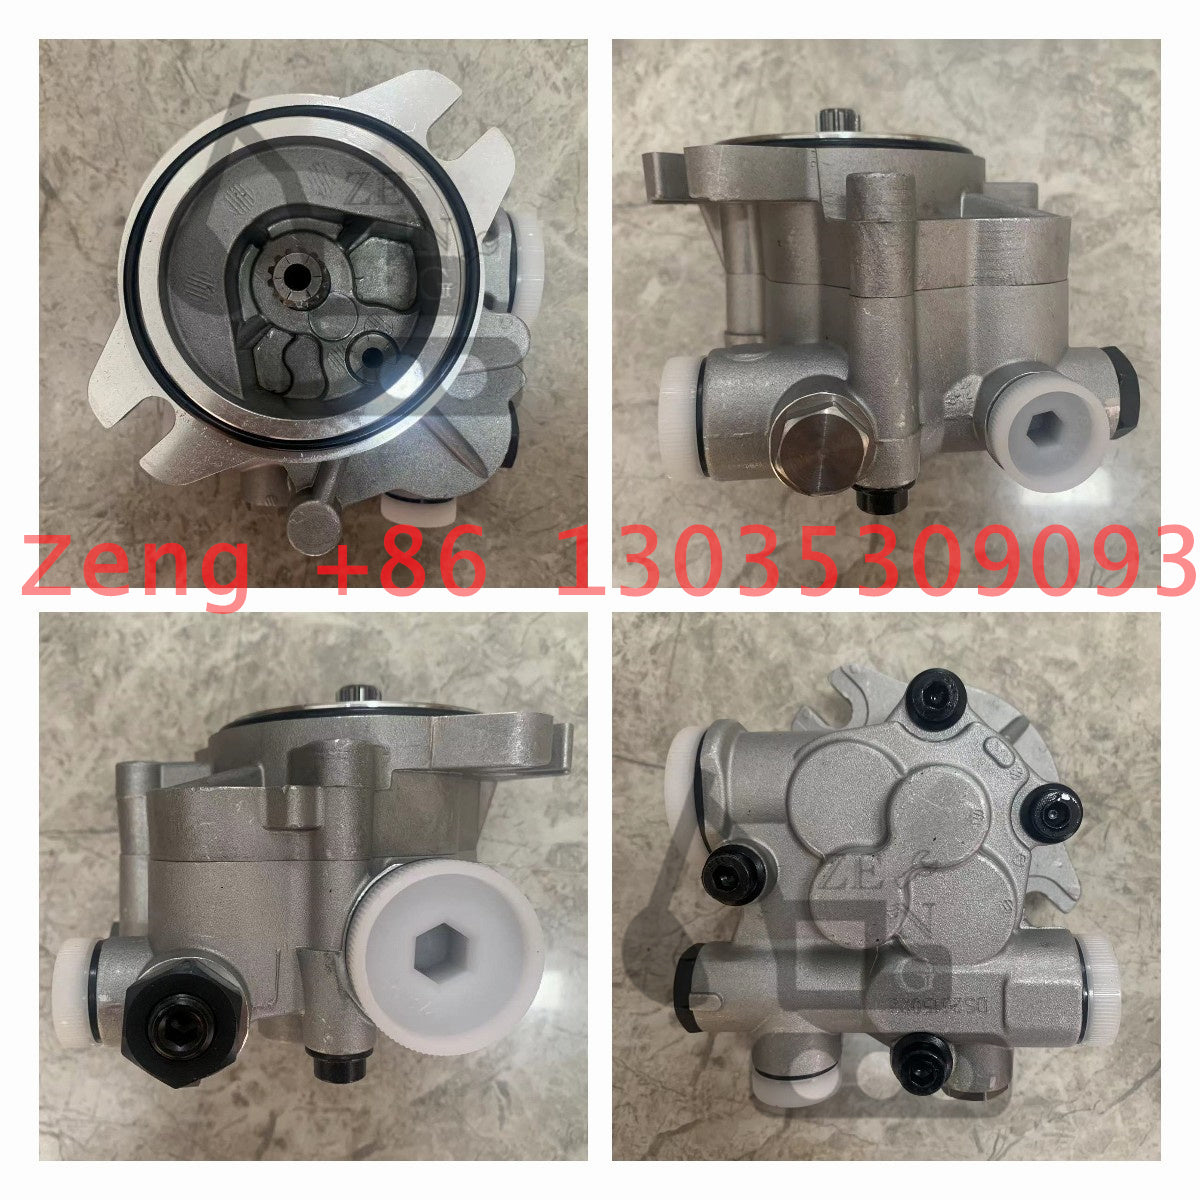 K3V112 hydraulic pump parts – 13035309093